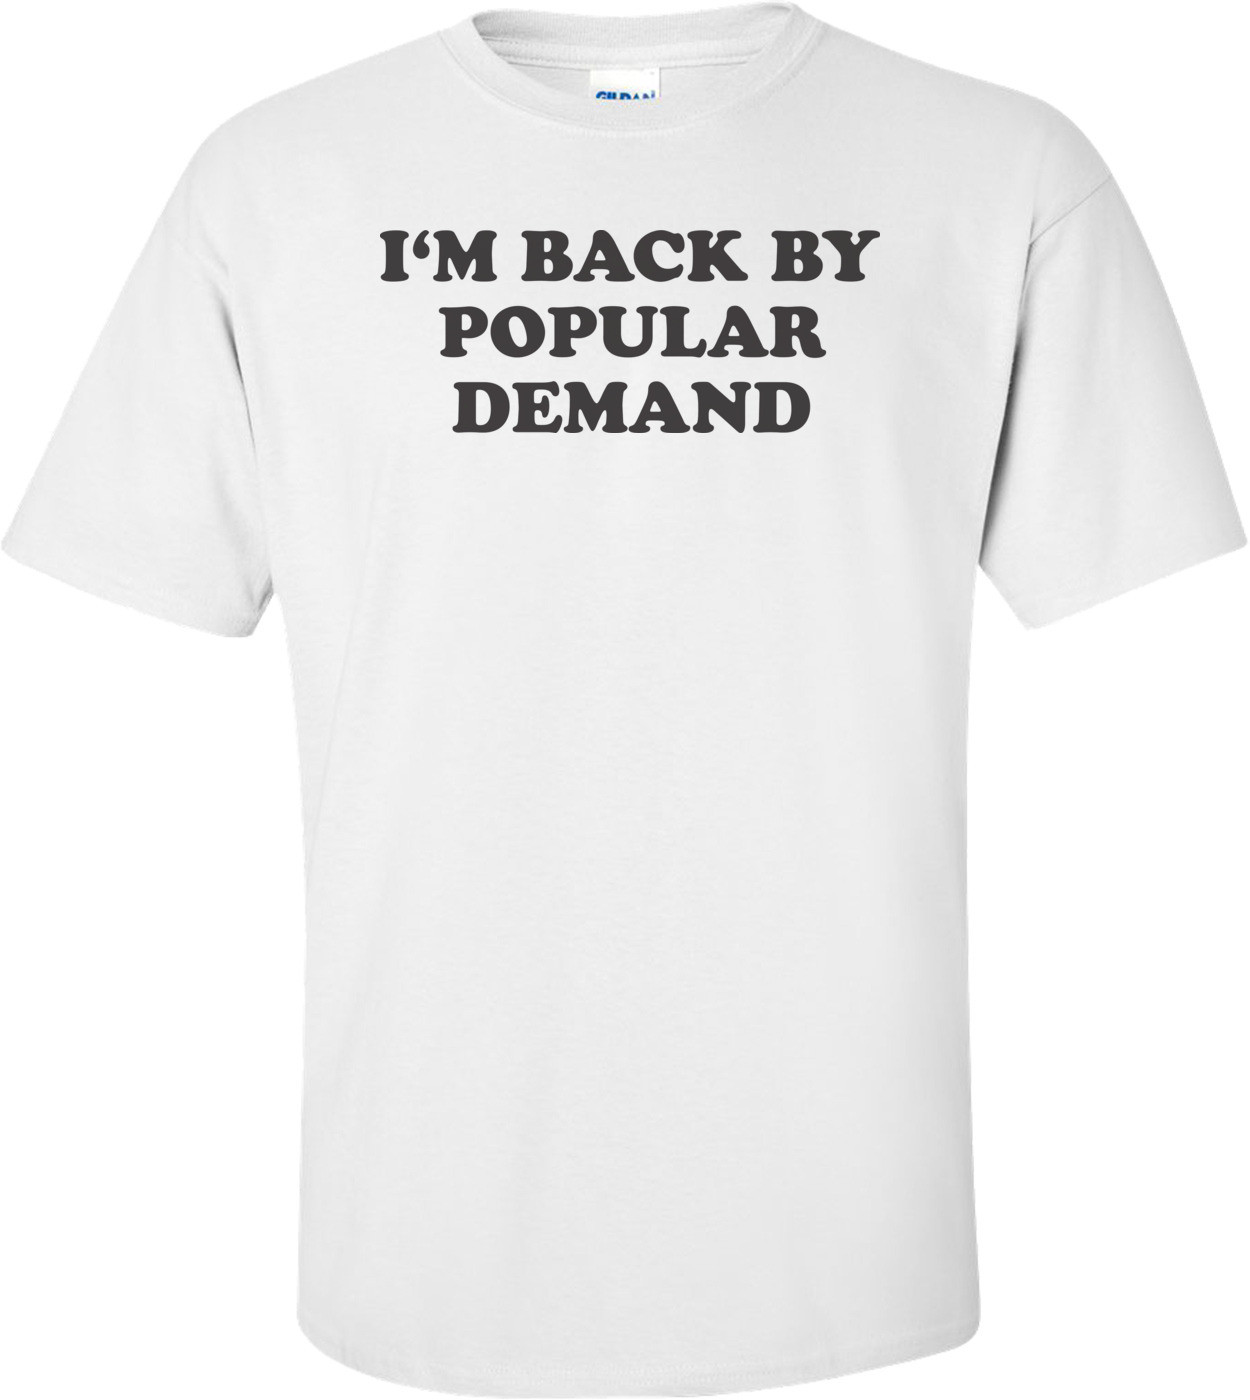 I'm Back By Popular Demand T-shirt 